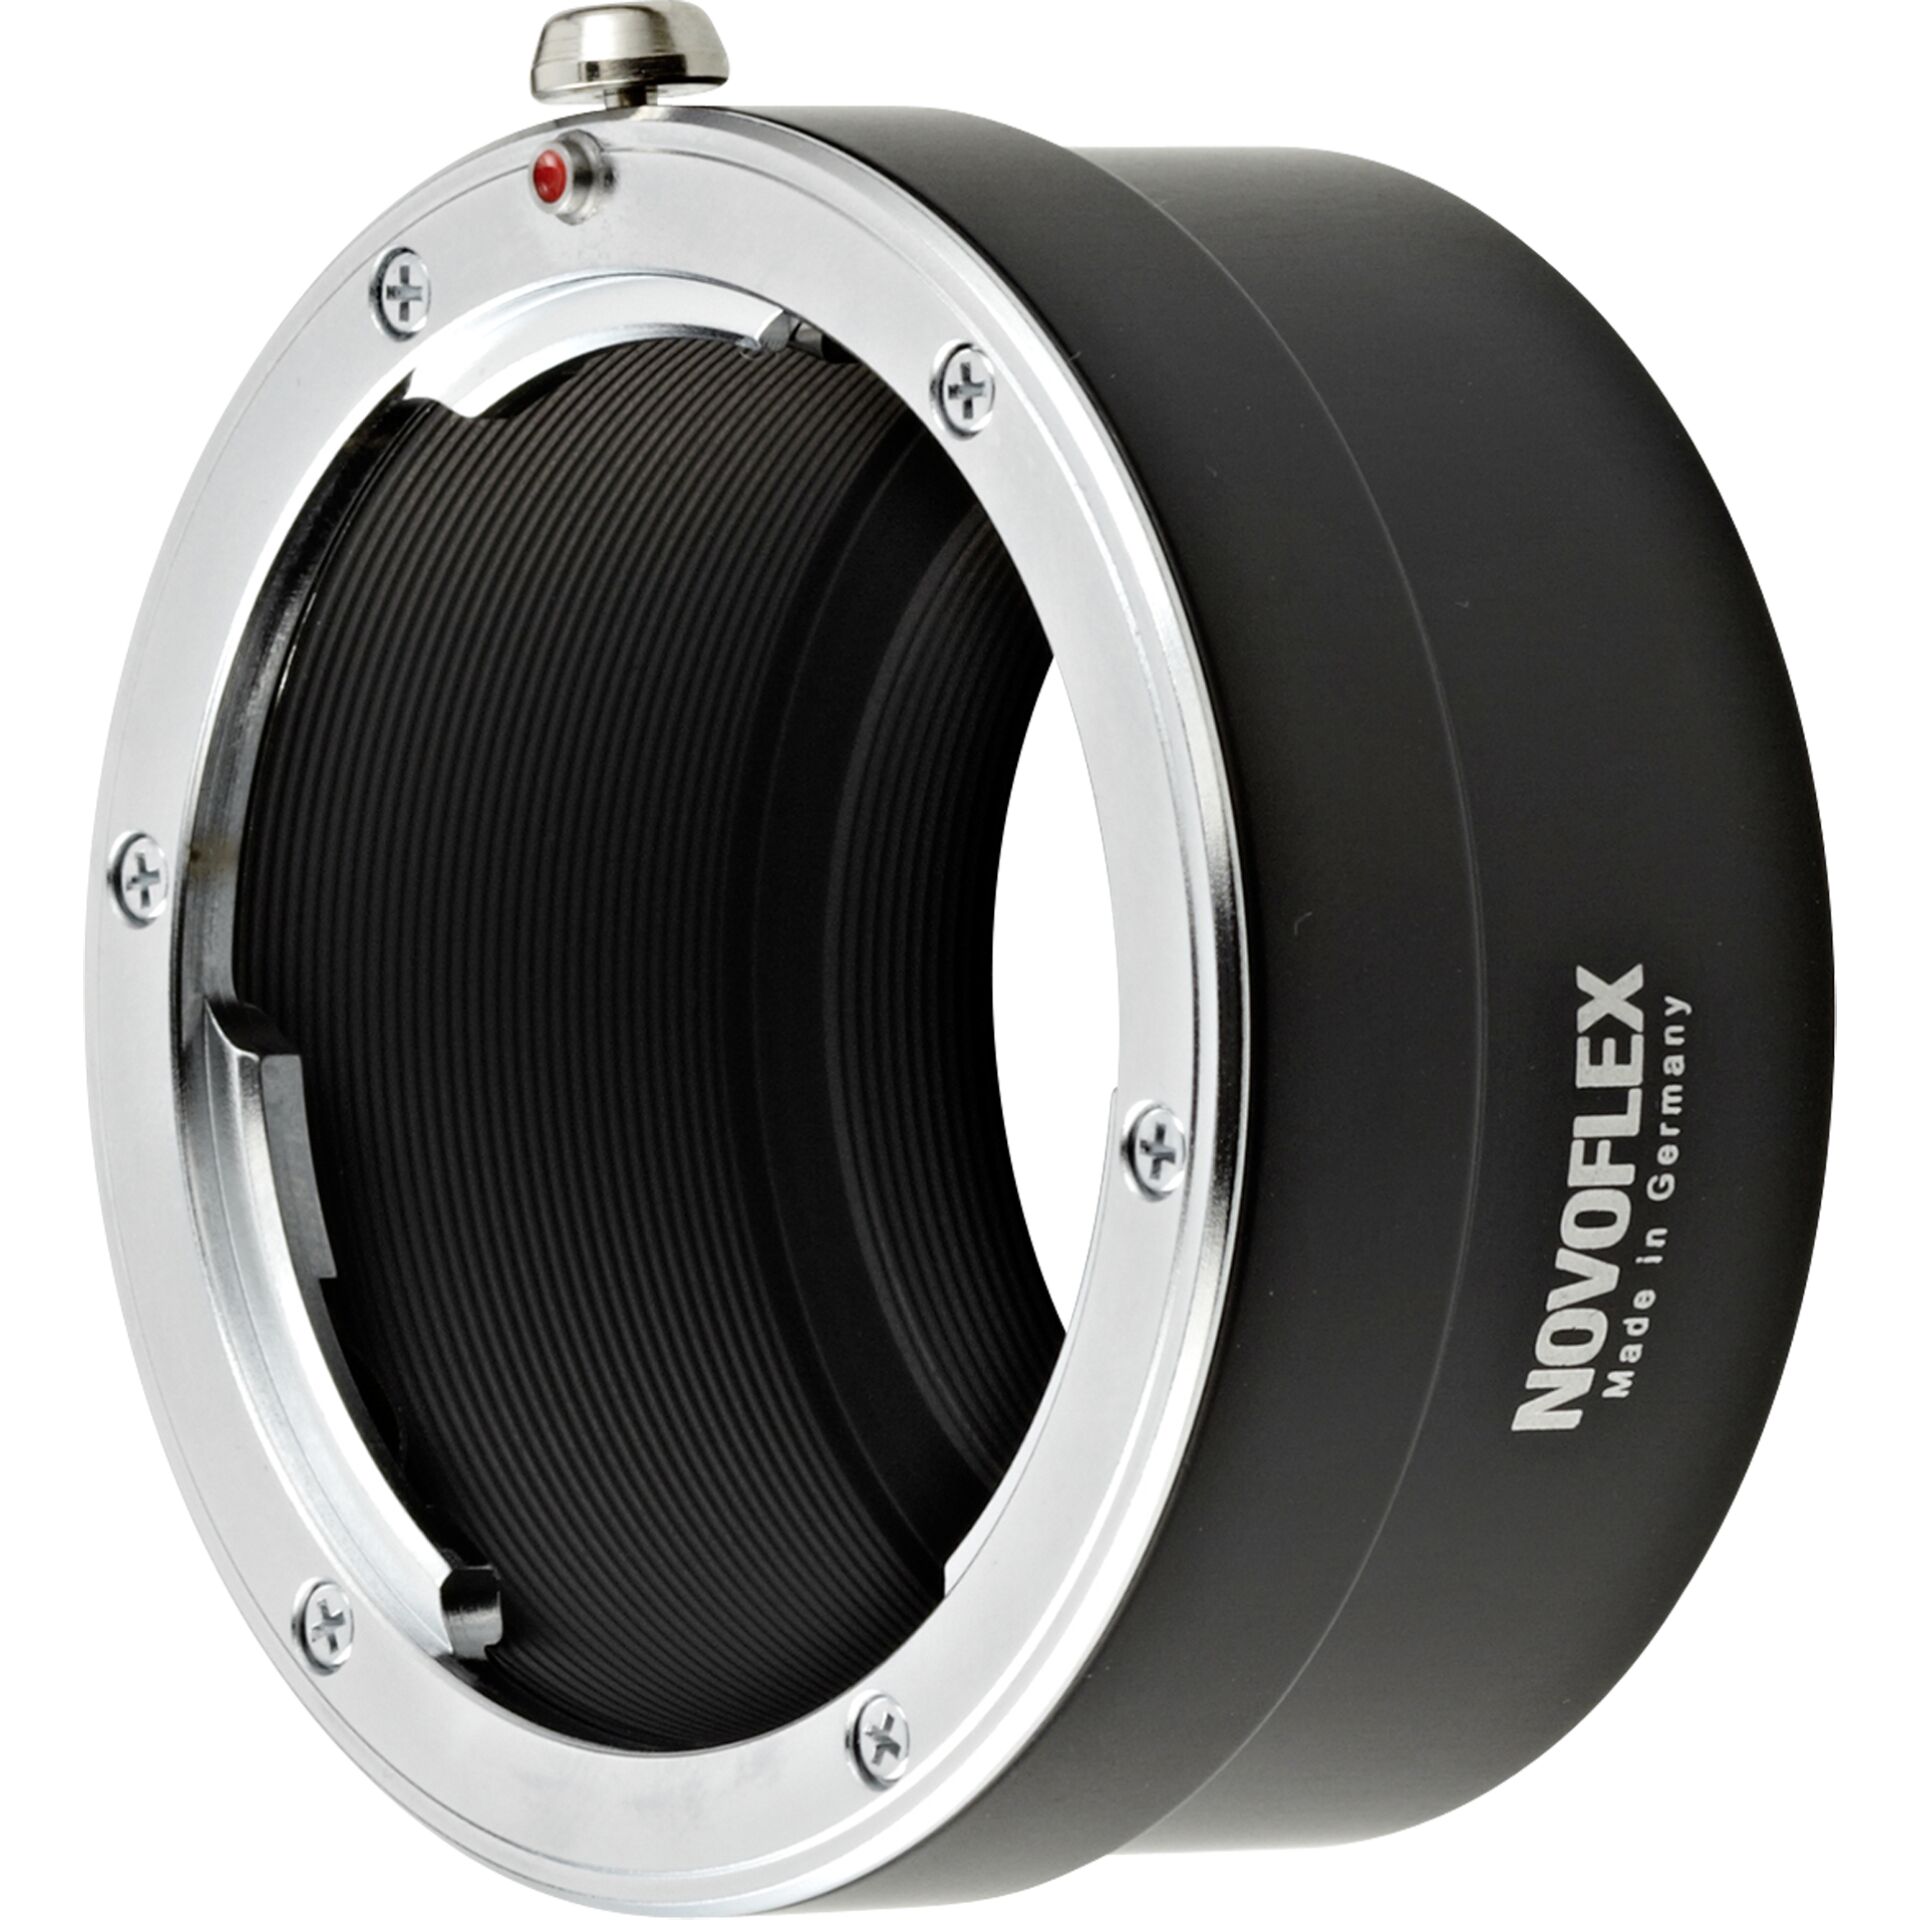 Novoflex NEX/LER Kameraobjektivadapter